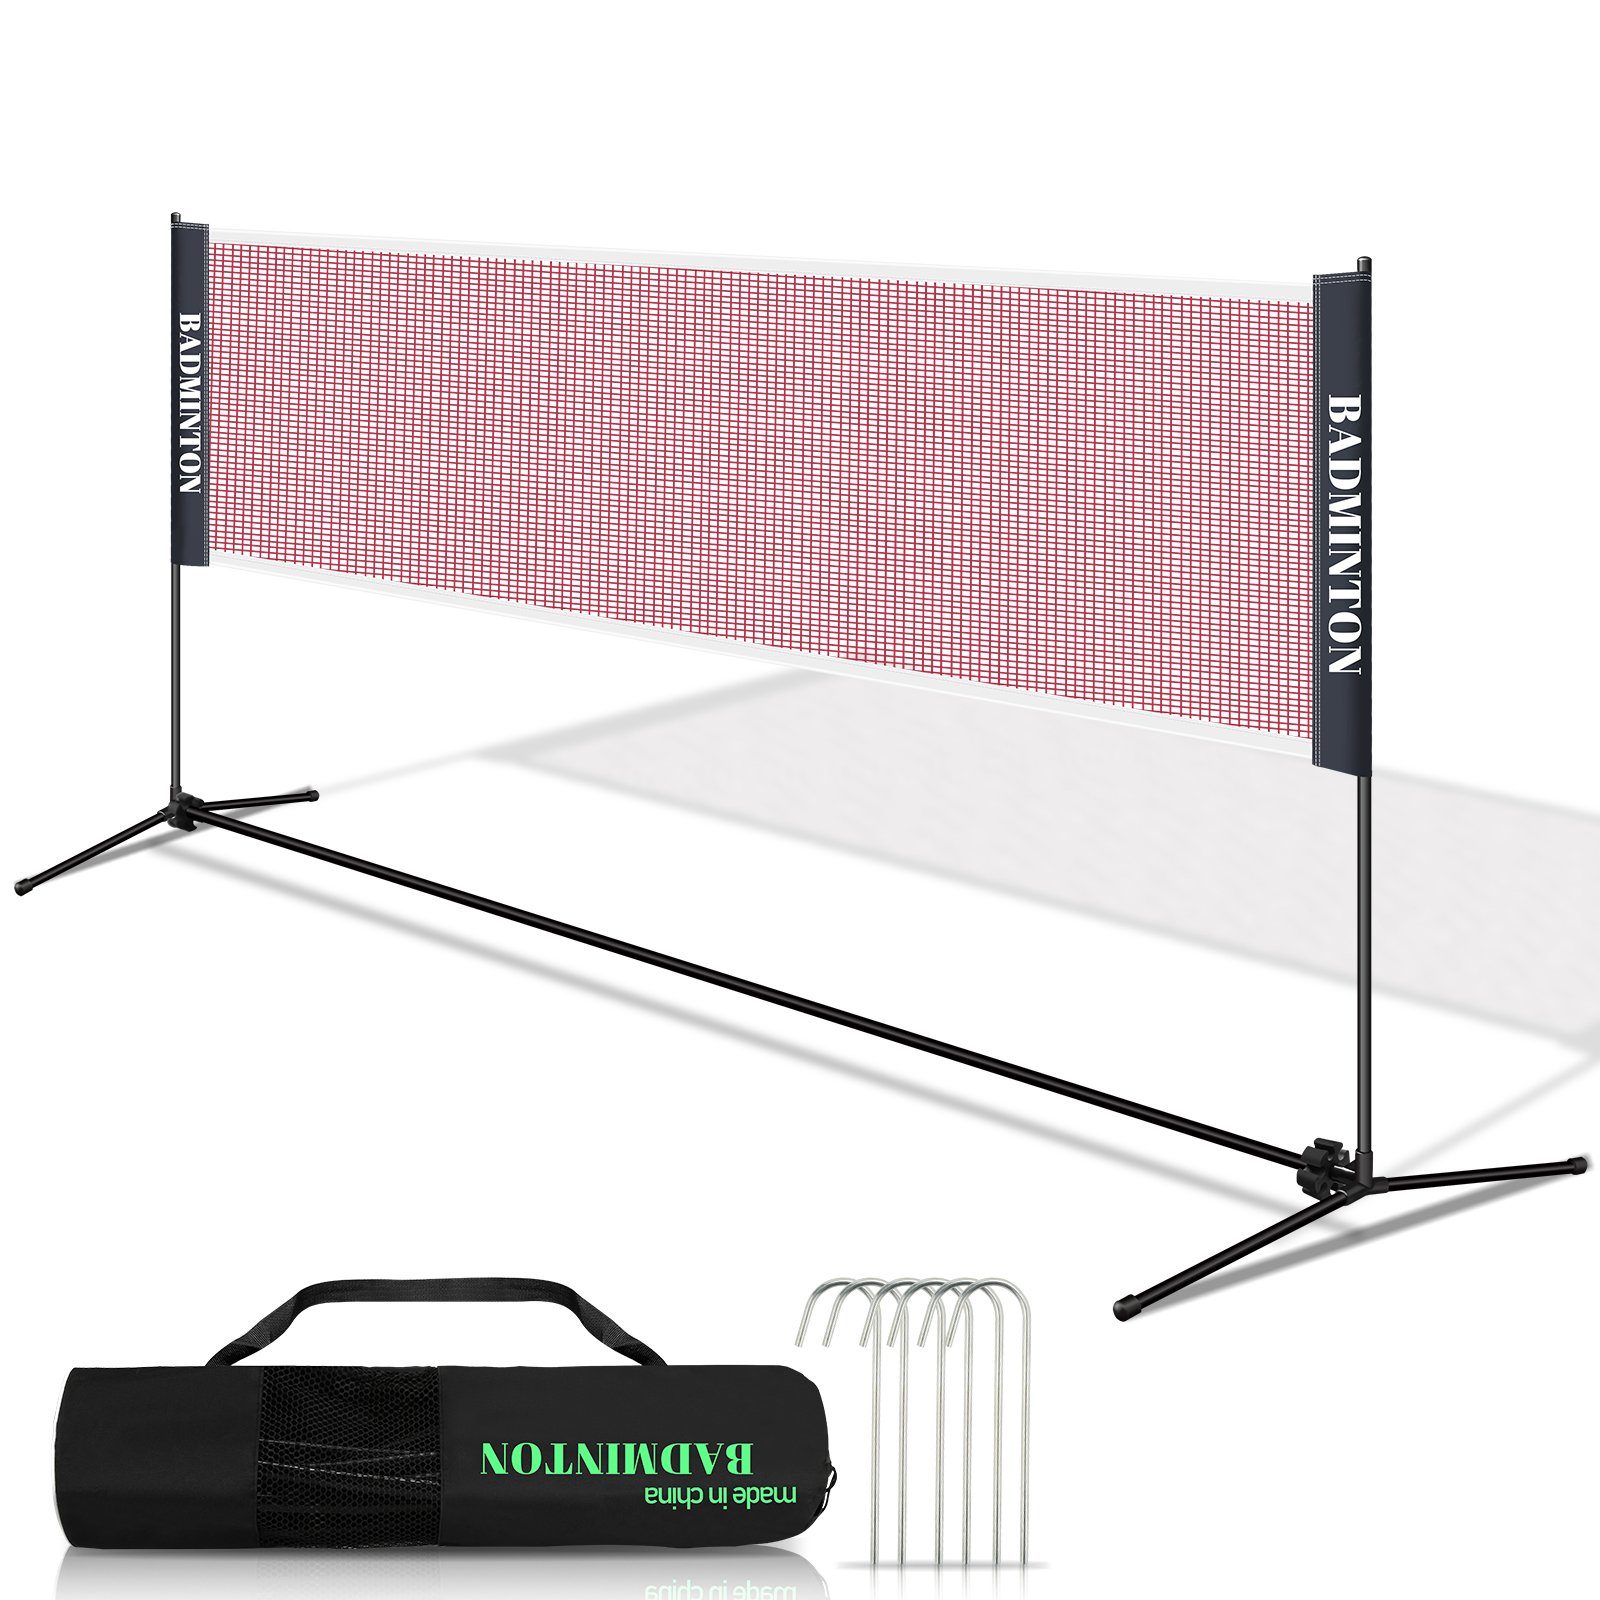 Randaco Badmintonnetz Tennisnetz 510cm Federballnetz Volleyballnetz Tragbares mit Tasche